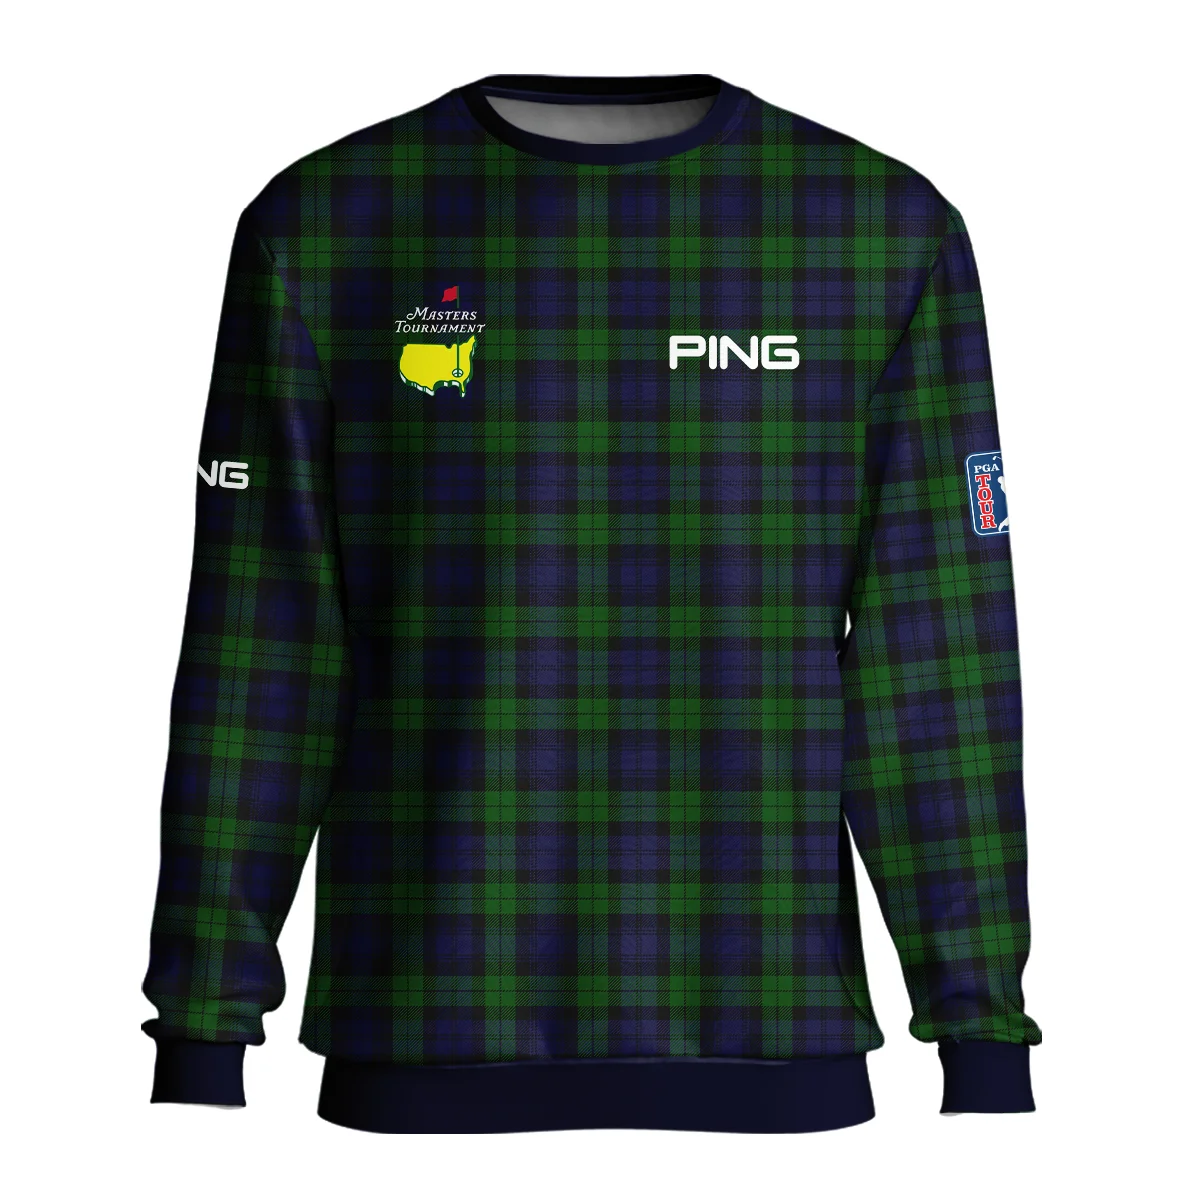 Masters Tournament Ping Golf Bomber Jacket Sports Green Purple Black Watch Tartan Plaid All Over Print Bomber Jacket